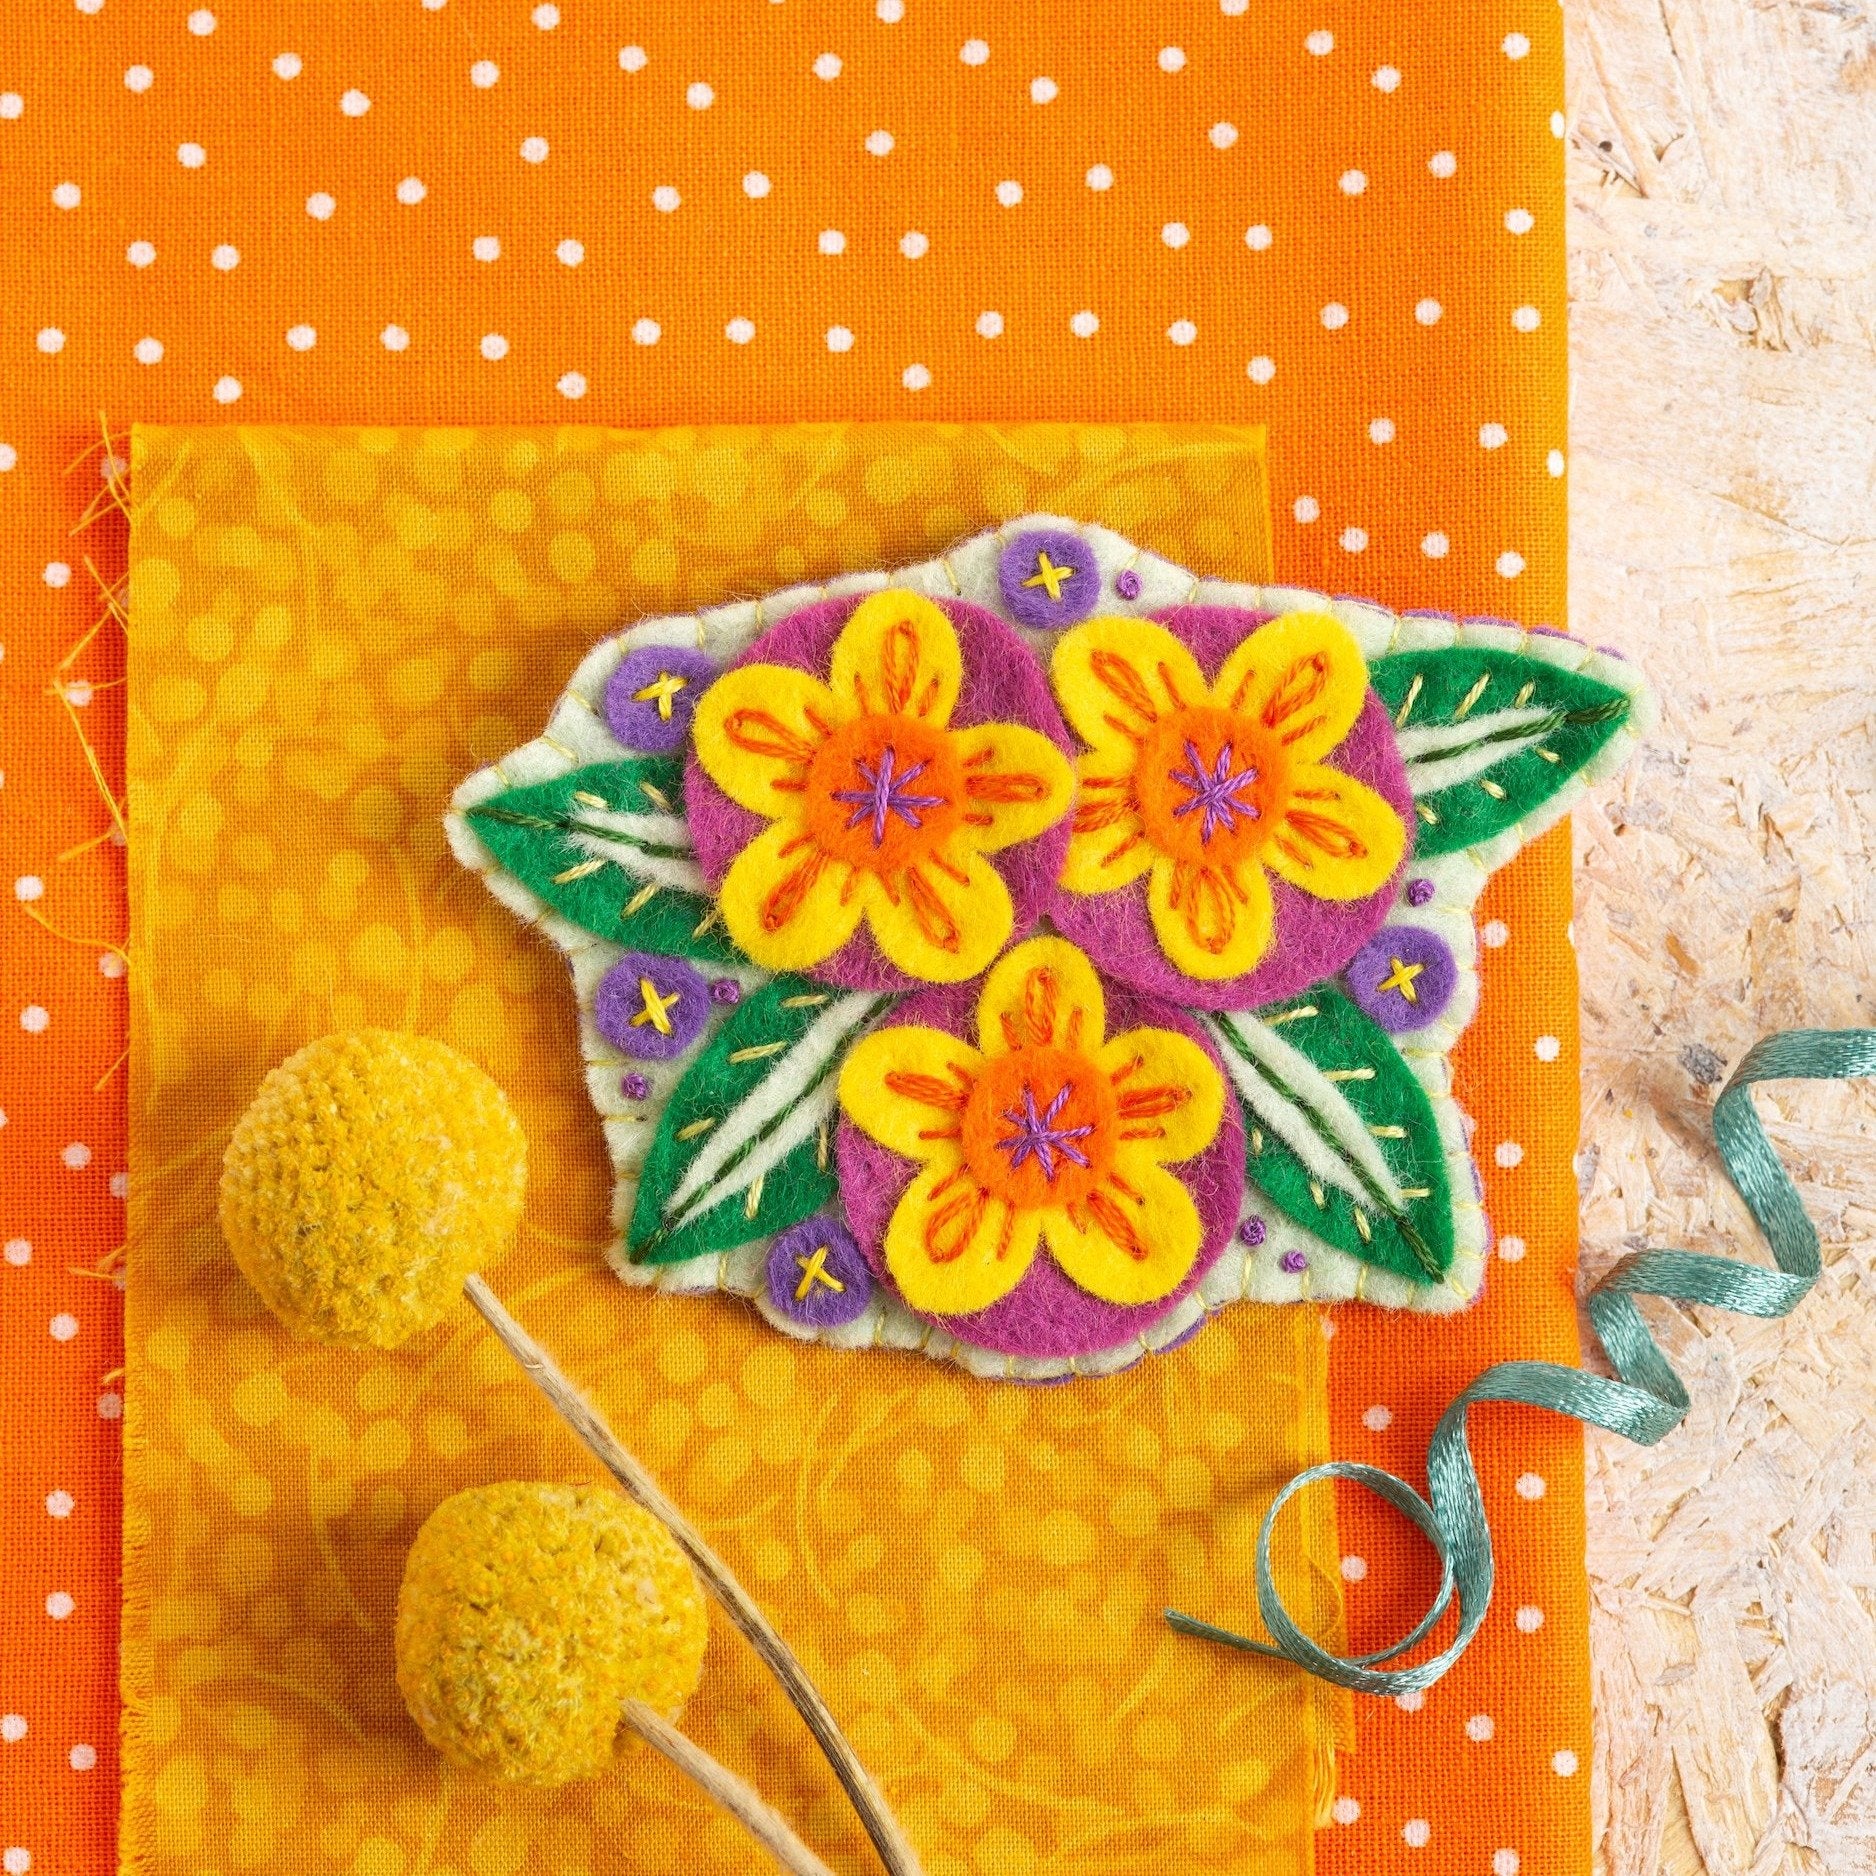 Penelope flower brooch displayed on orange fabrics on a wooden background.